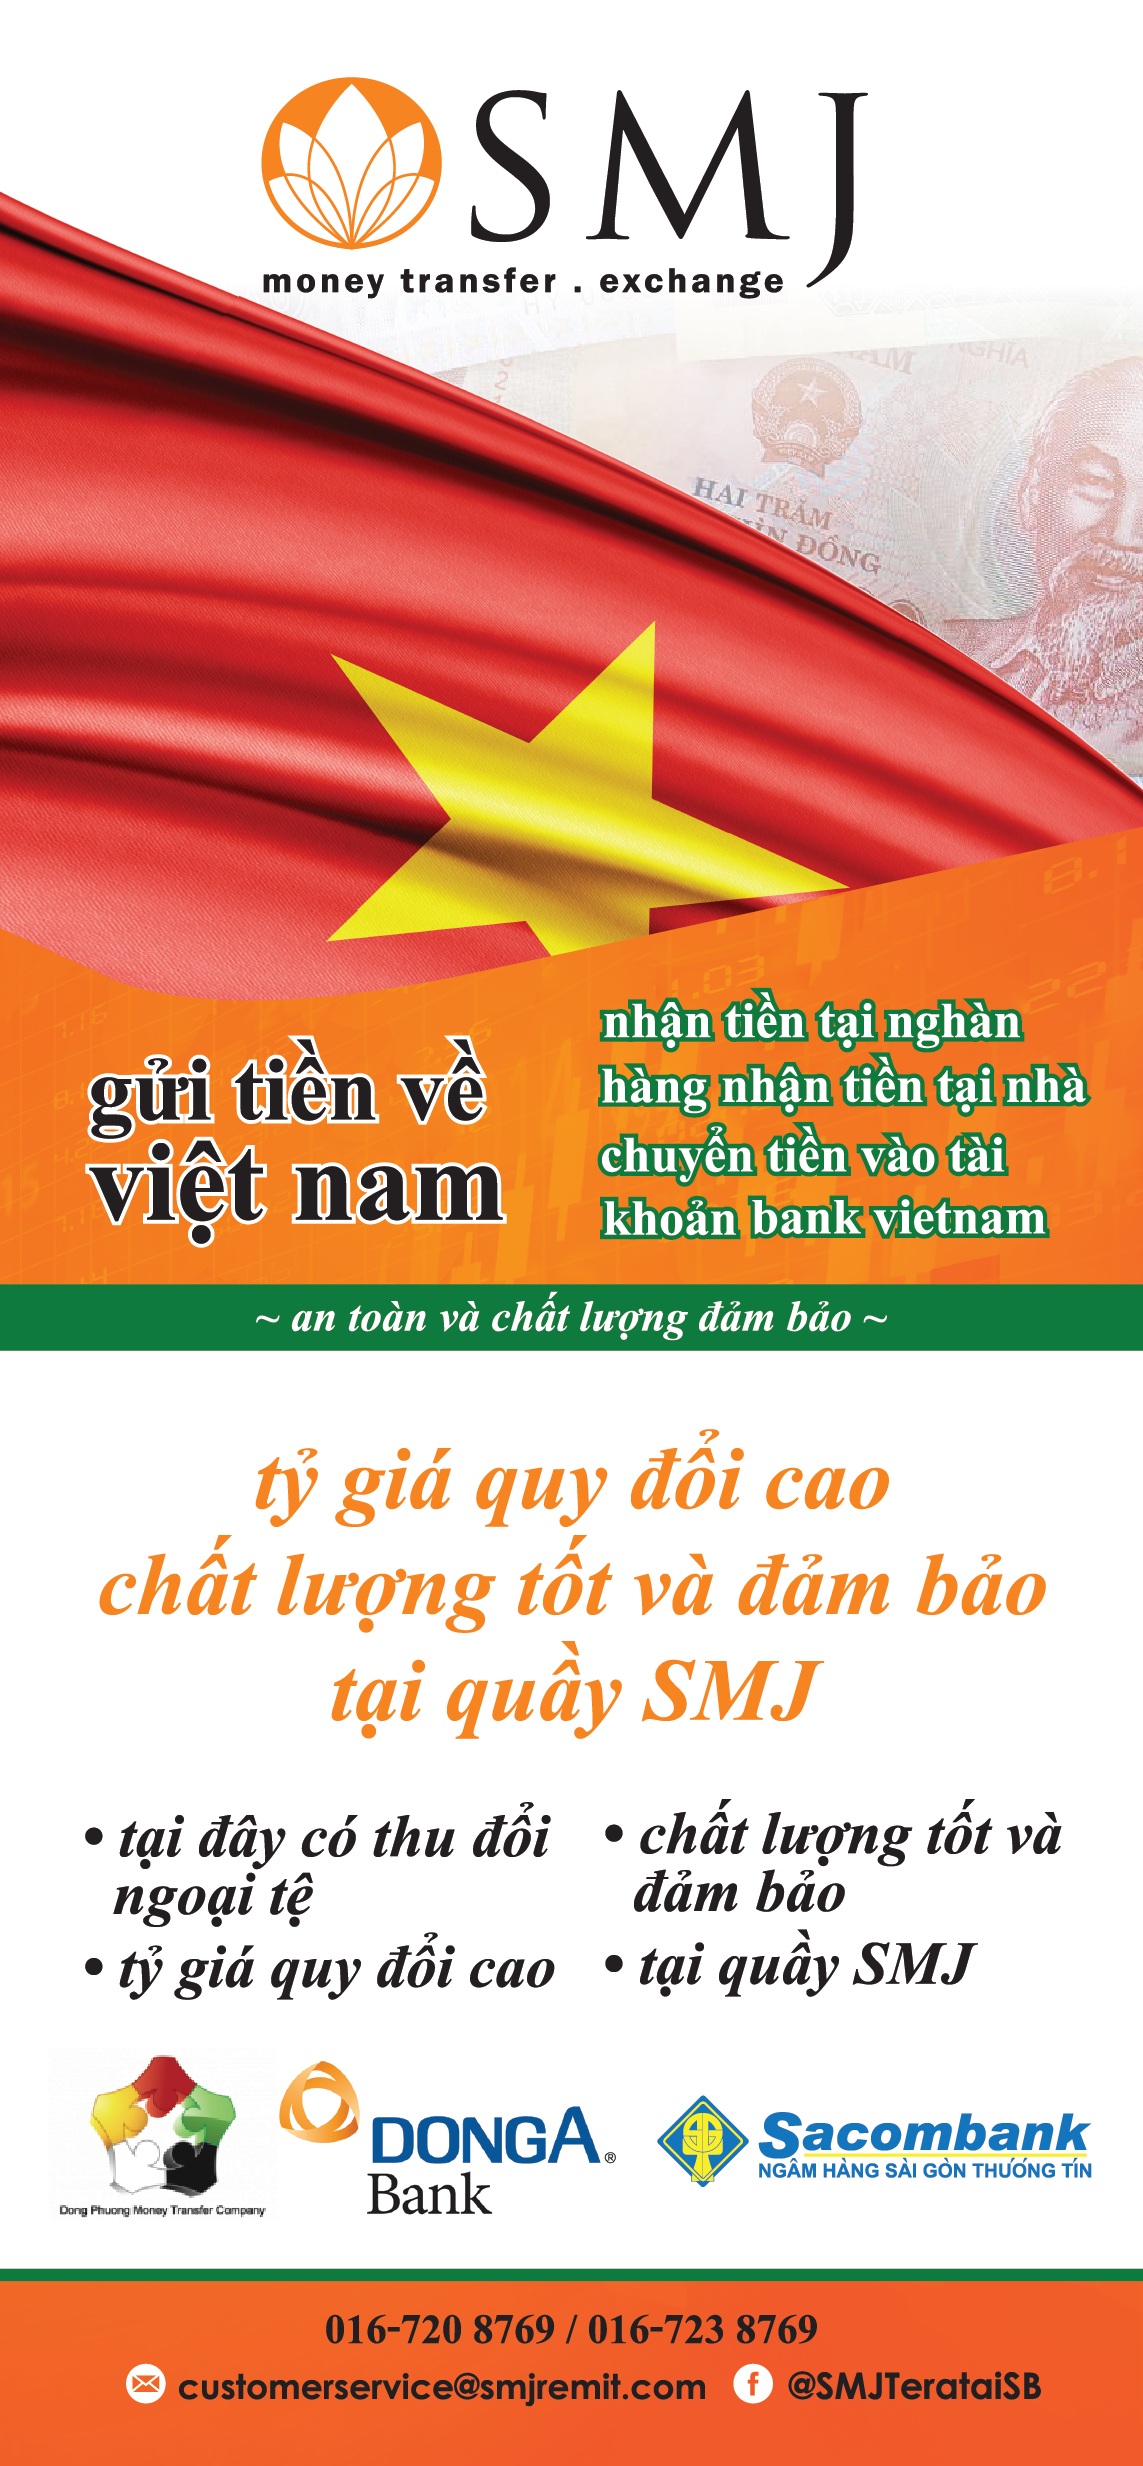 Send Money to Vietnam